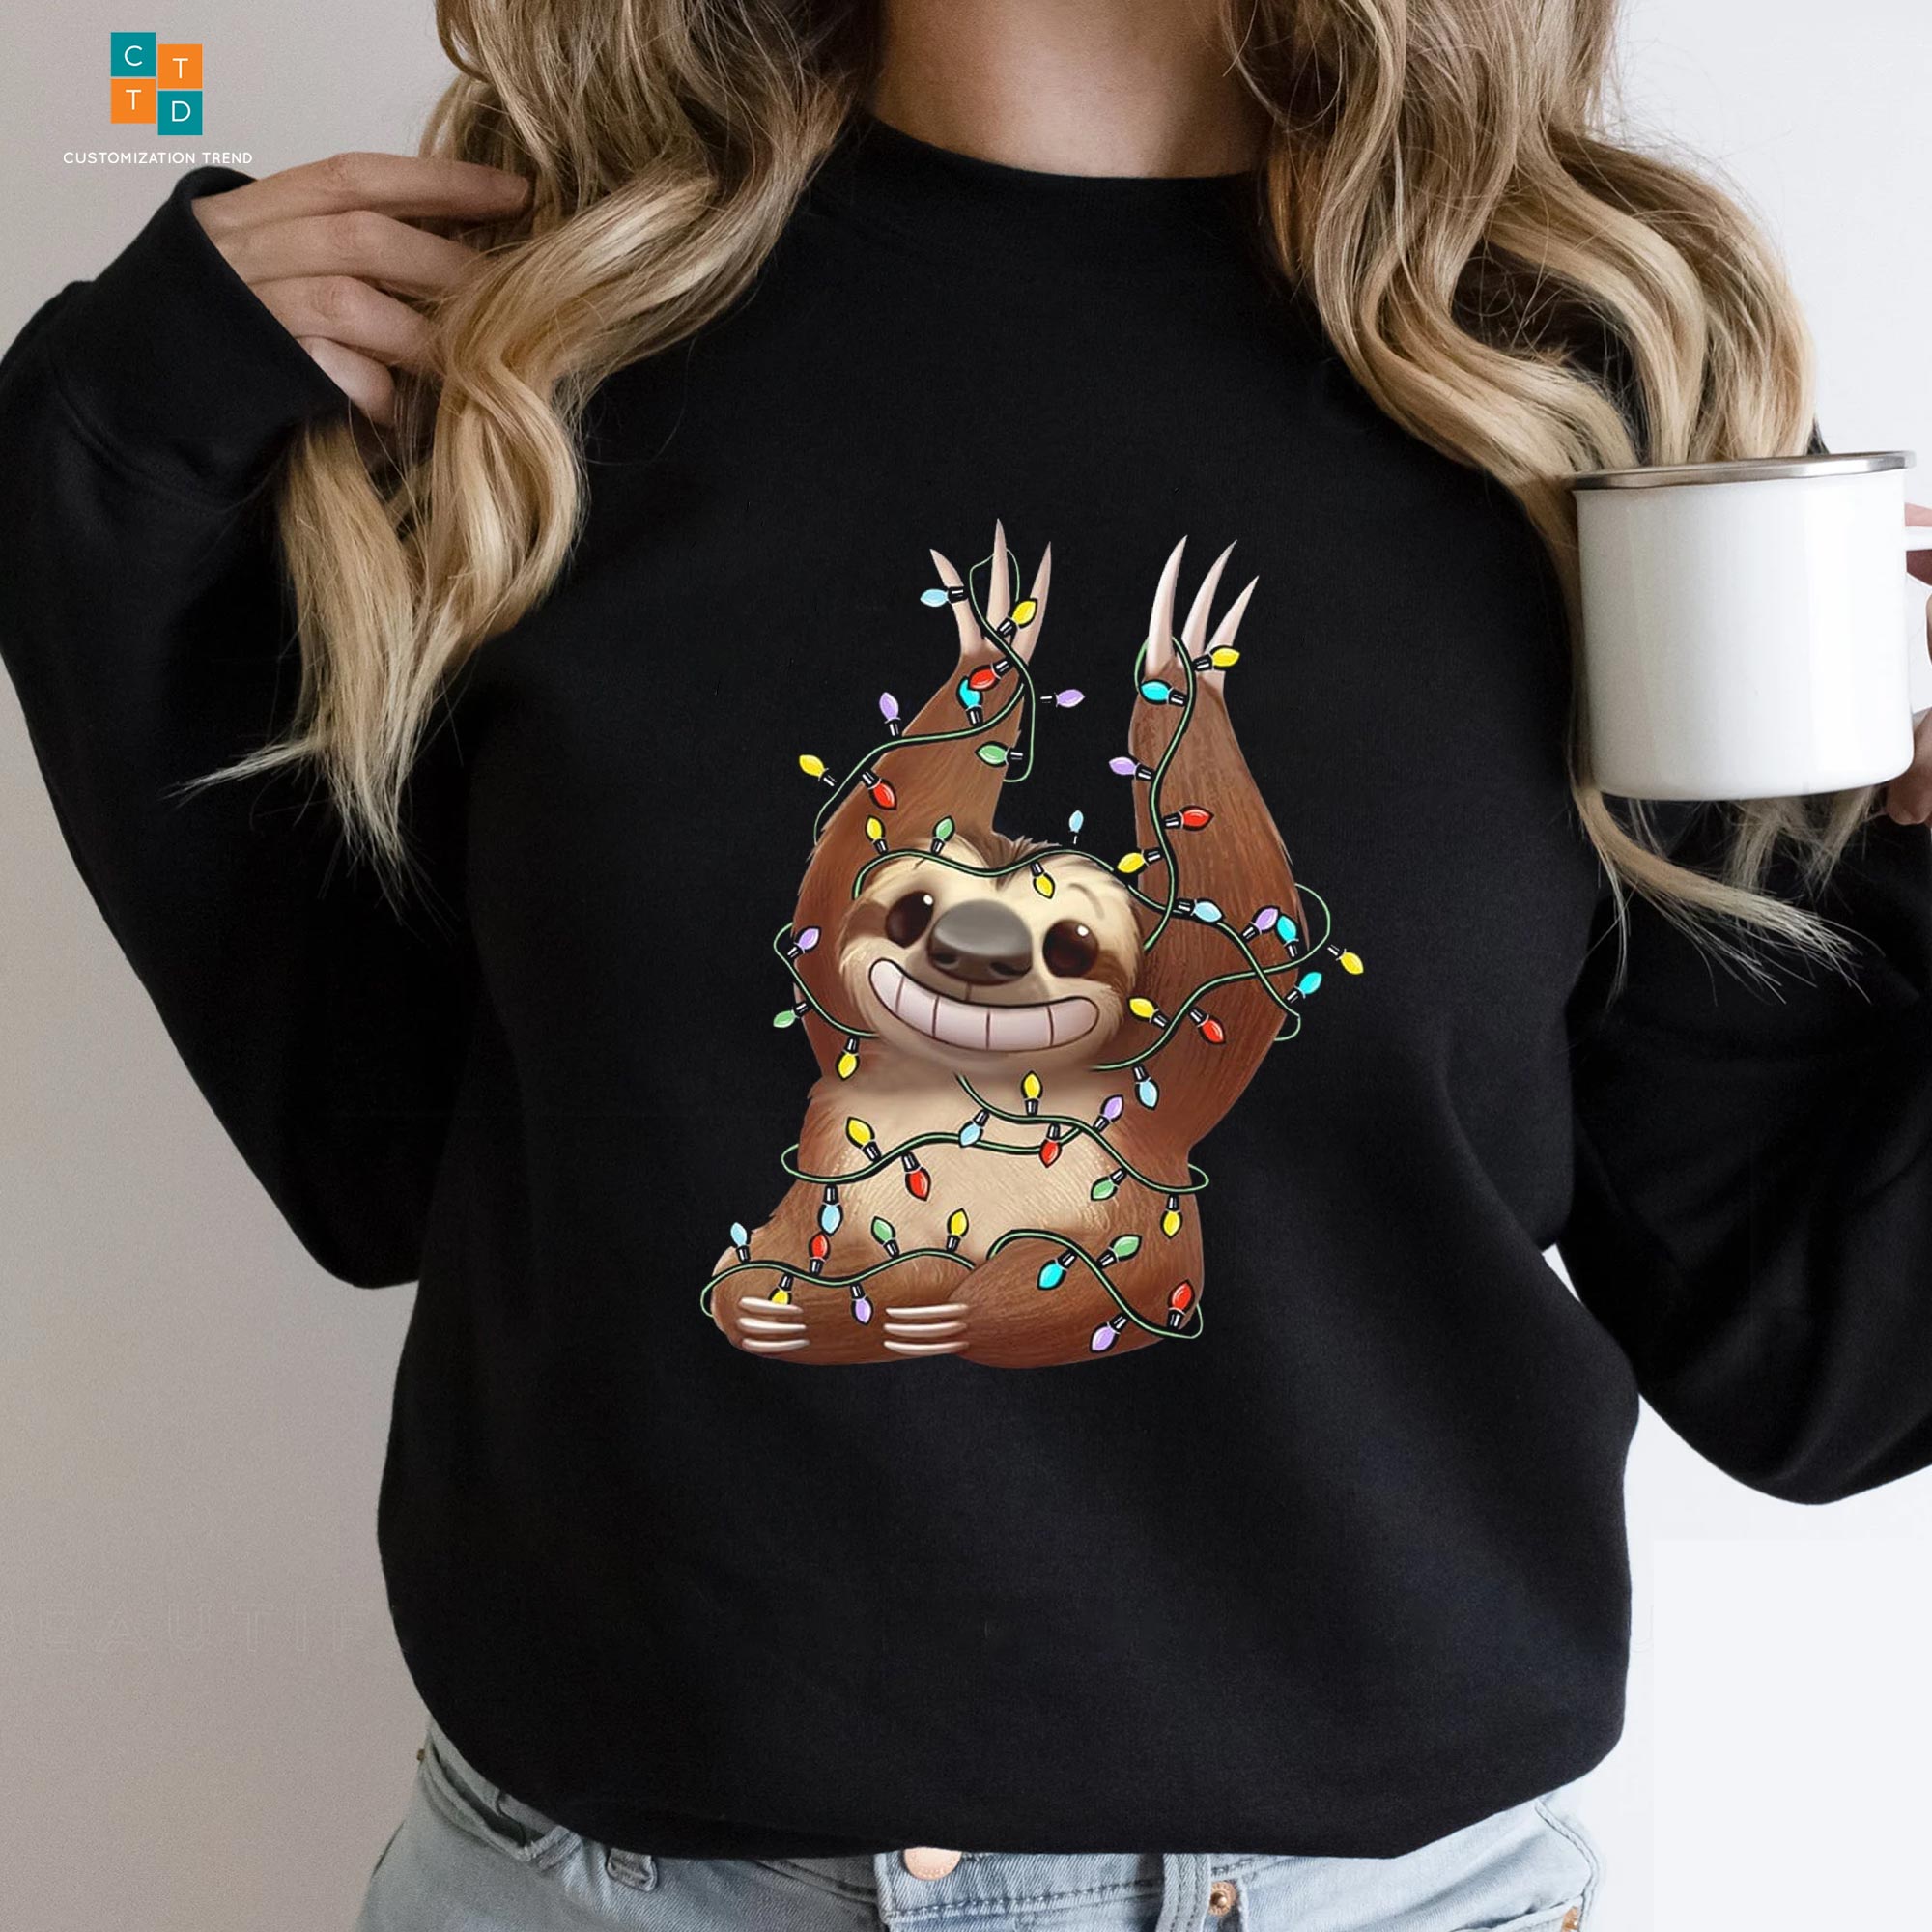 A Sloth Hoodie, Shirt